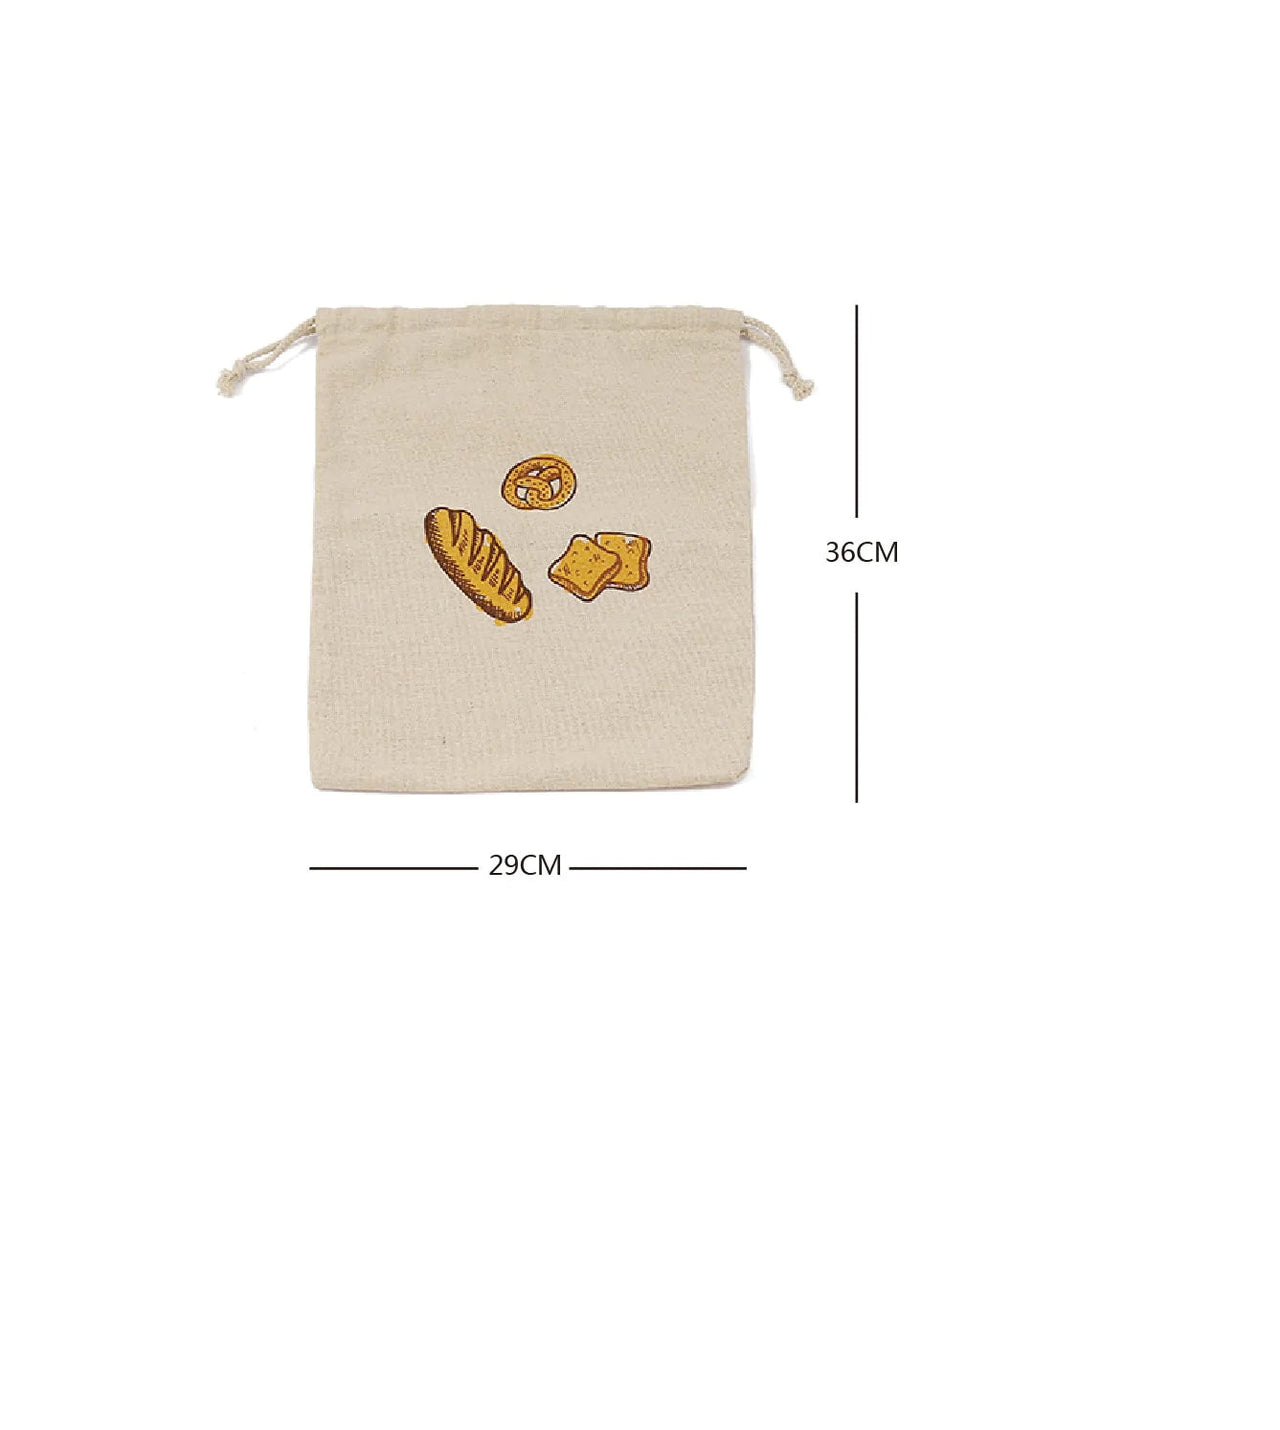 Cotton Linen Bread Bags, Reusable Drawstring Bag For Loaf Artisan Bread Storage Bag, Linen Bread Bags For Baguette